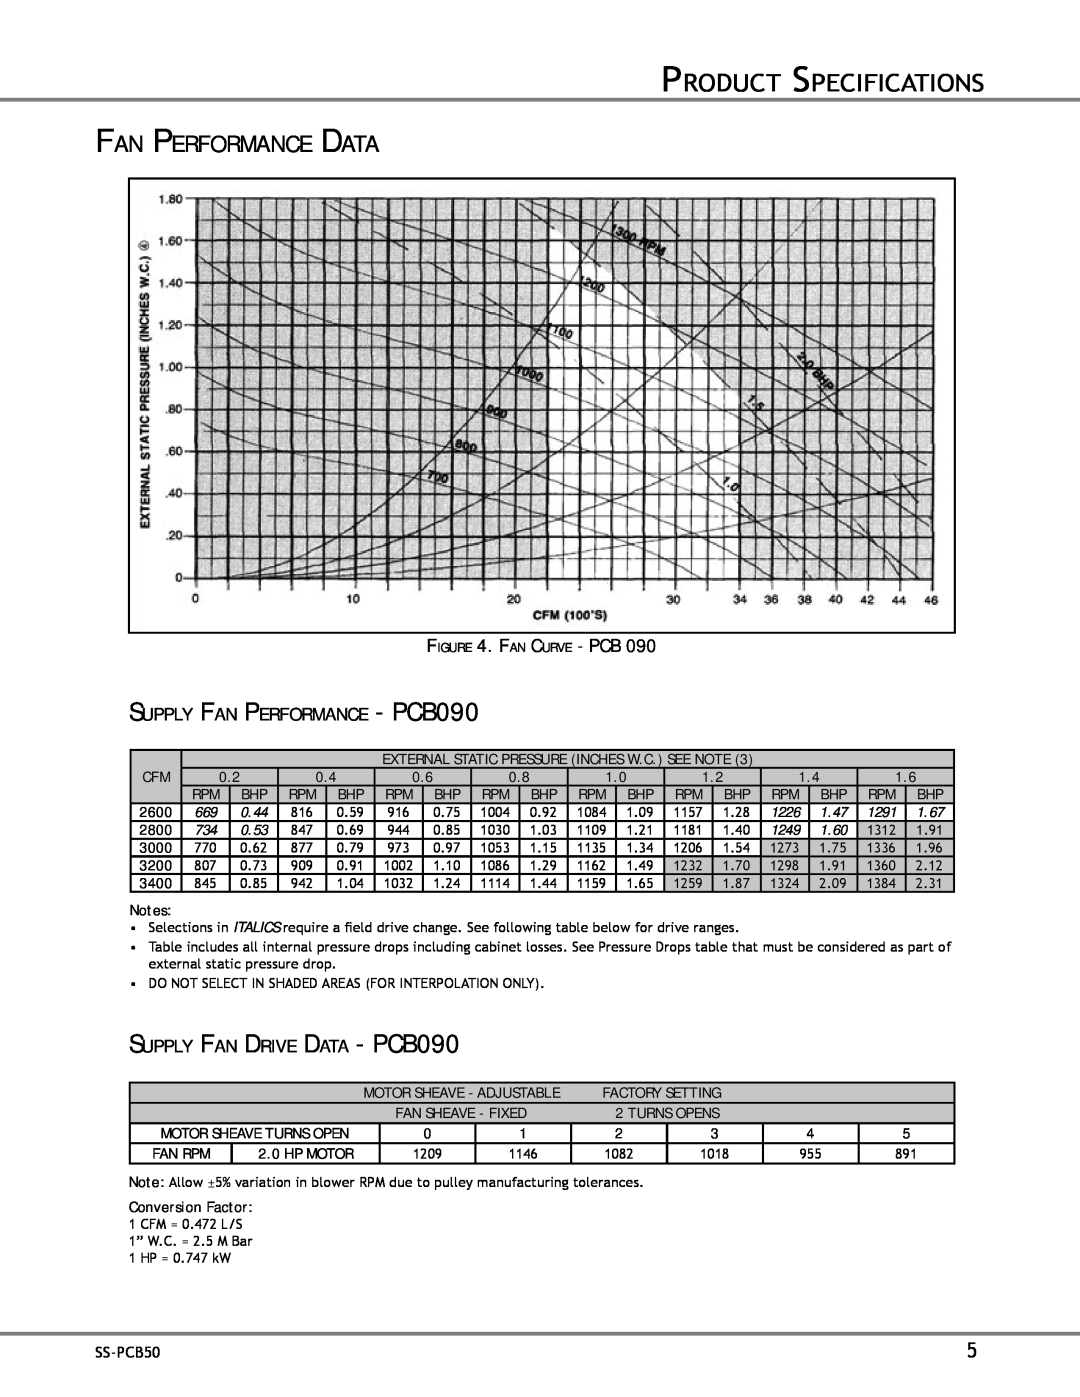 Goodman Mfg SS-PCB50 Fan Performance Data, Fan Curve - Pcb, SUPPLY FAN PERFORMANCE - PCB090, Product Specifications 